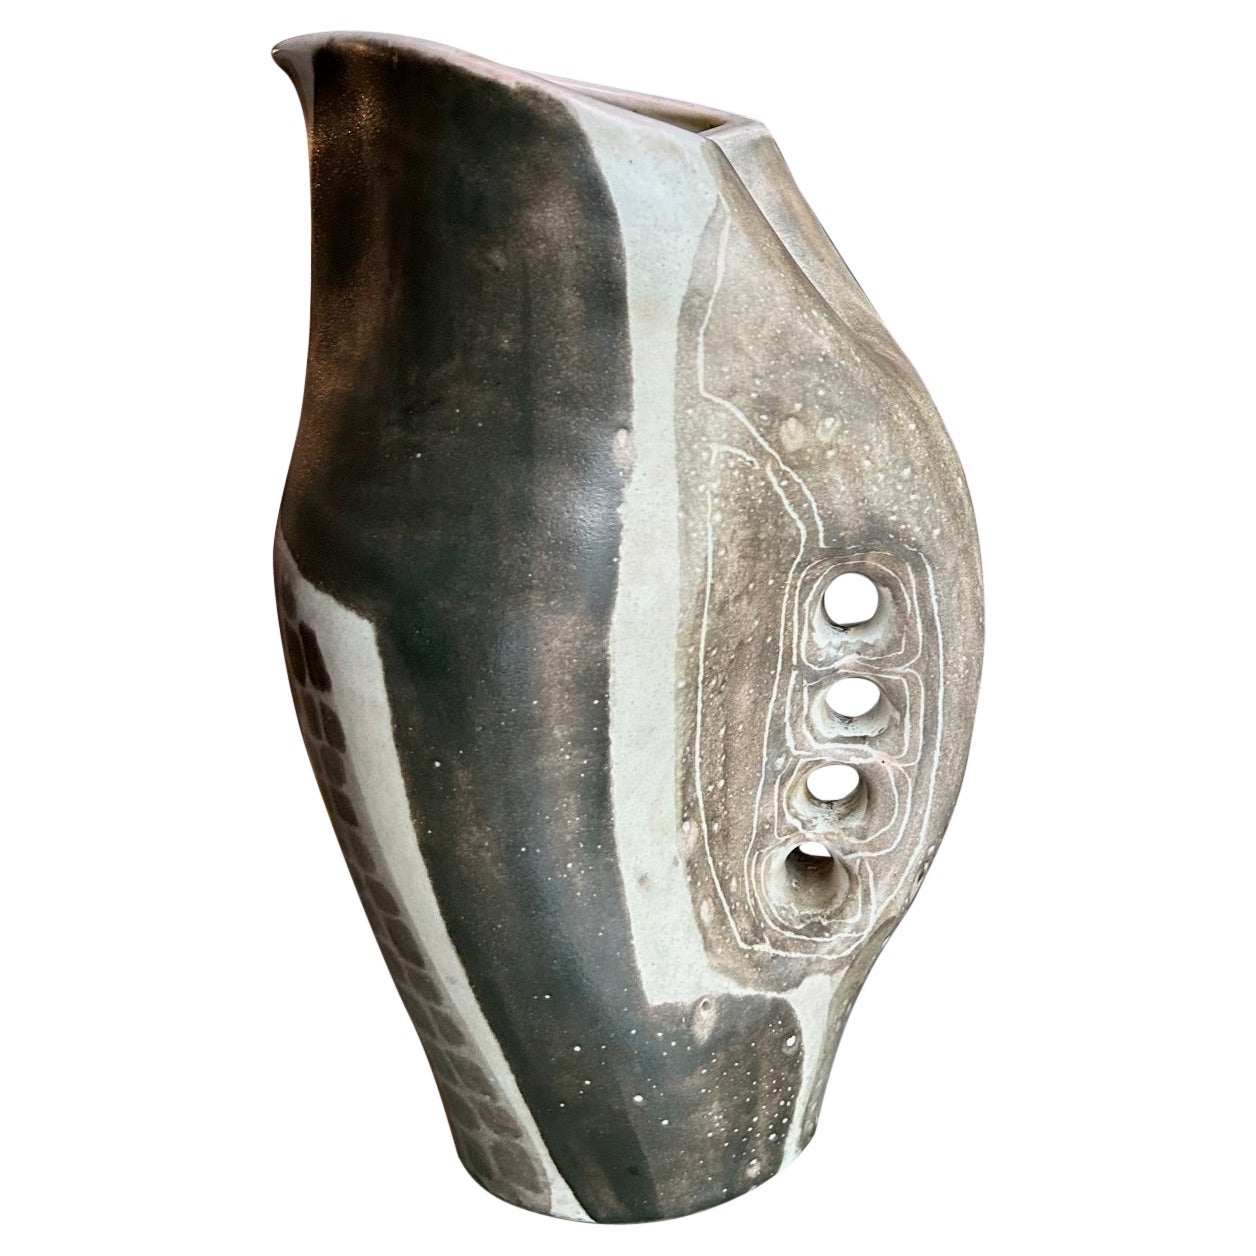 Ceramic pitcher by Mado Jolain, France, 1960's